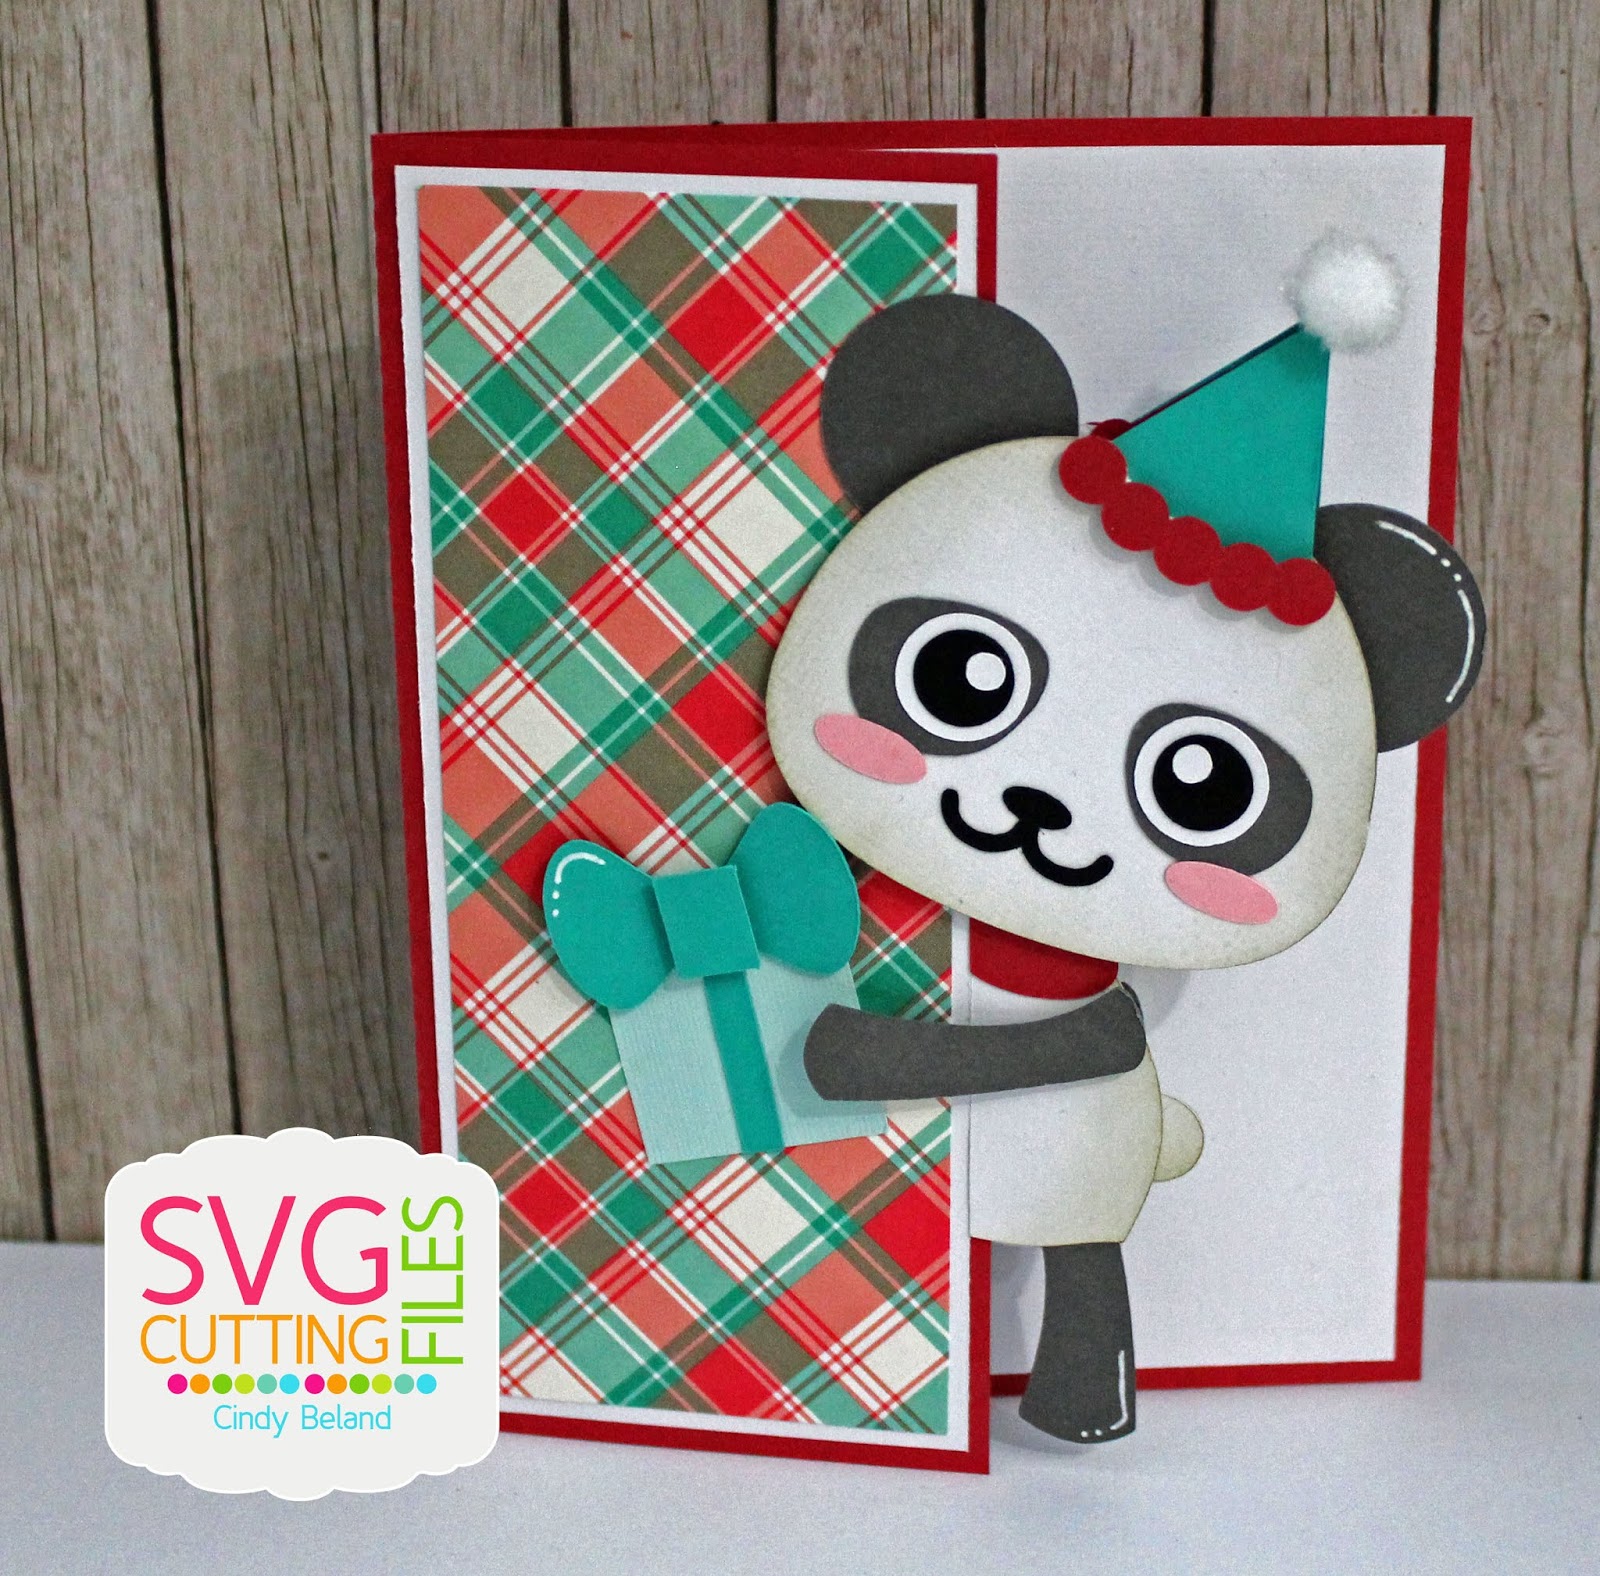 Download SVG Cutting Files: FUN Birthday Cards!!!